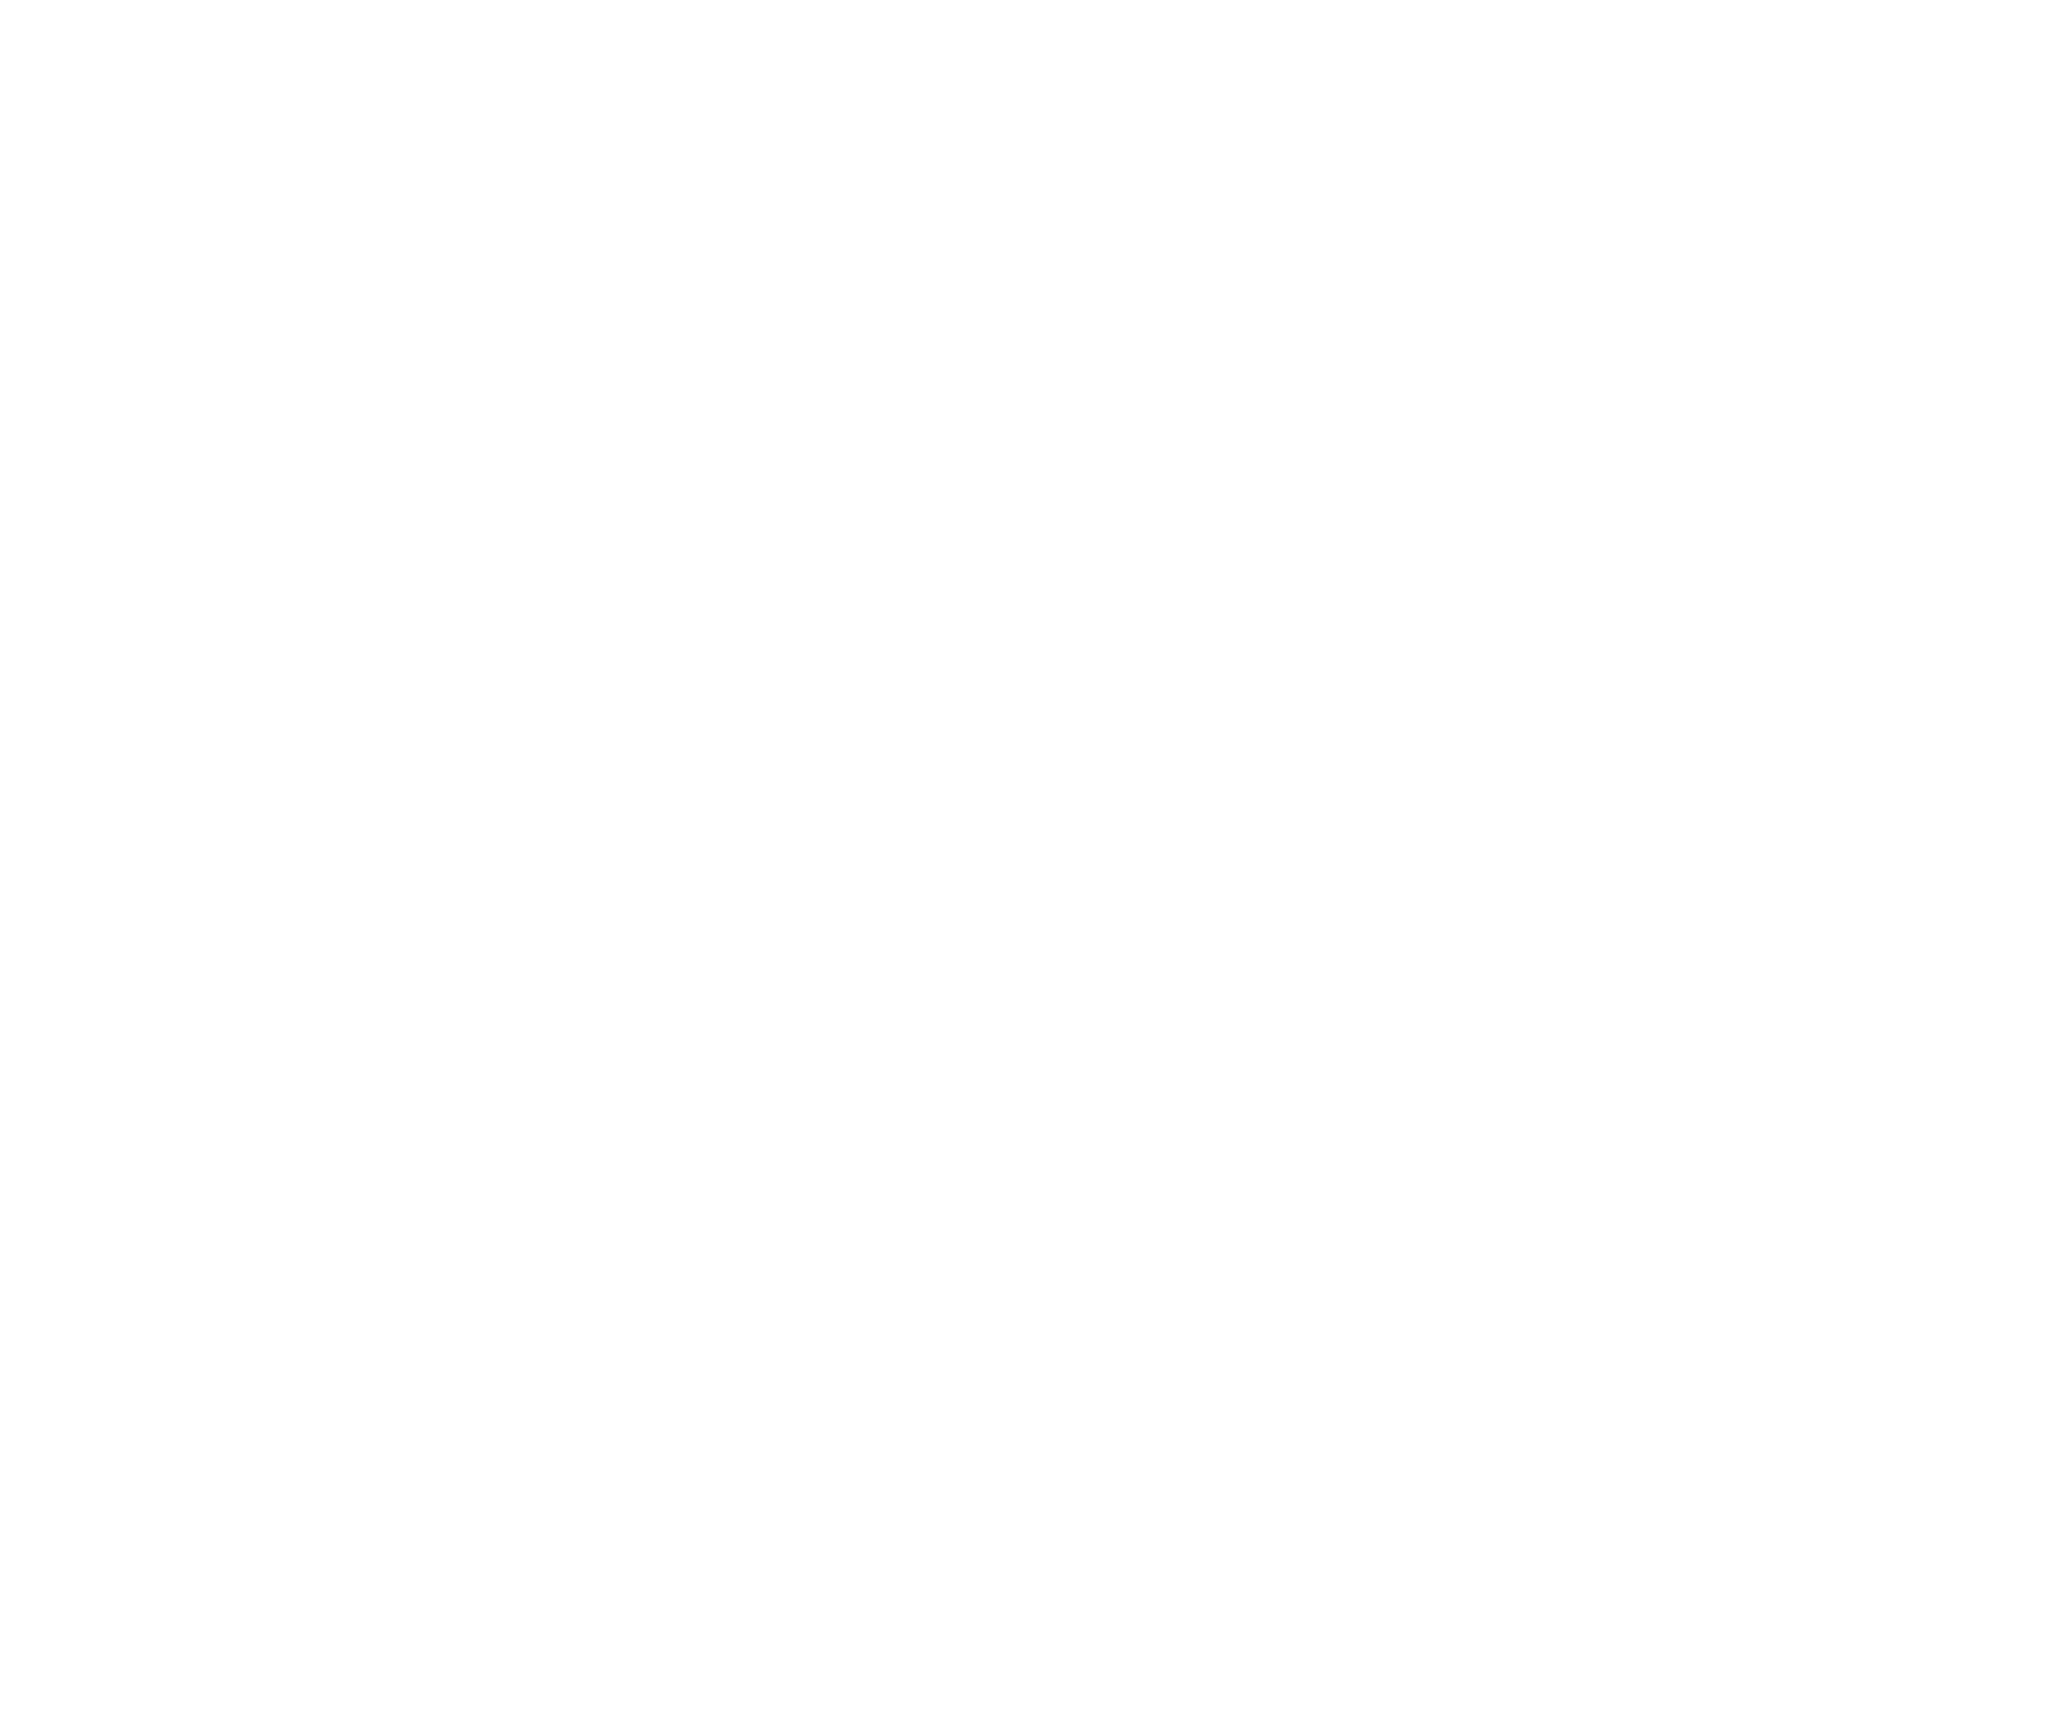 A logo saying Too Many Teeth; the capital Es in Teeth look like a set of jaws